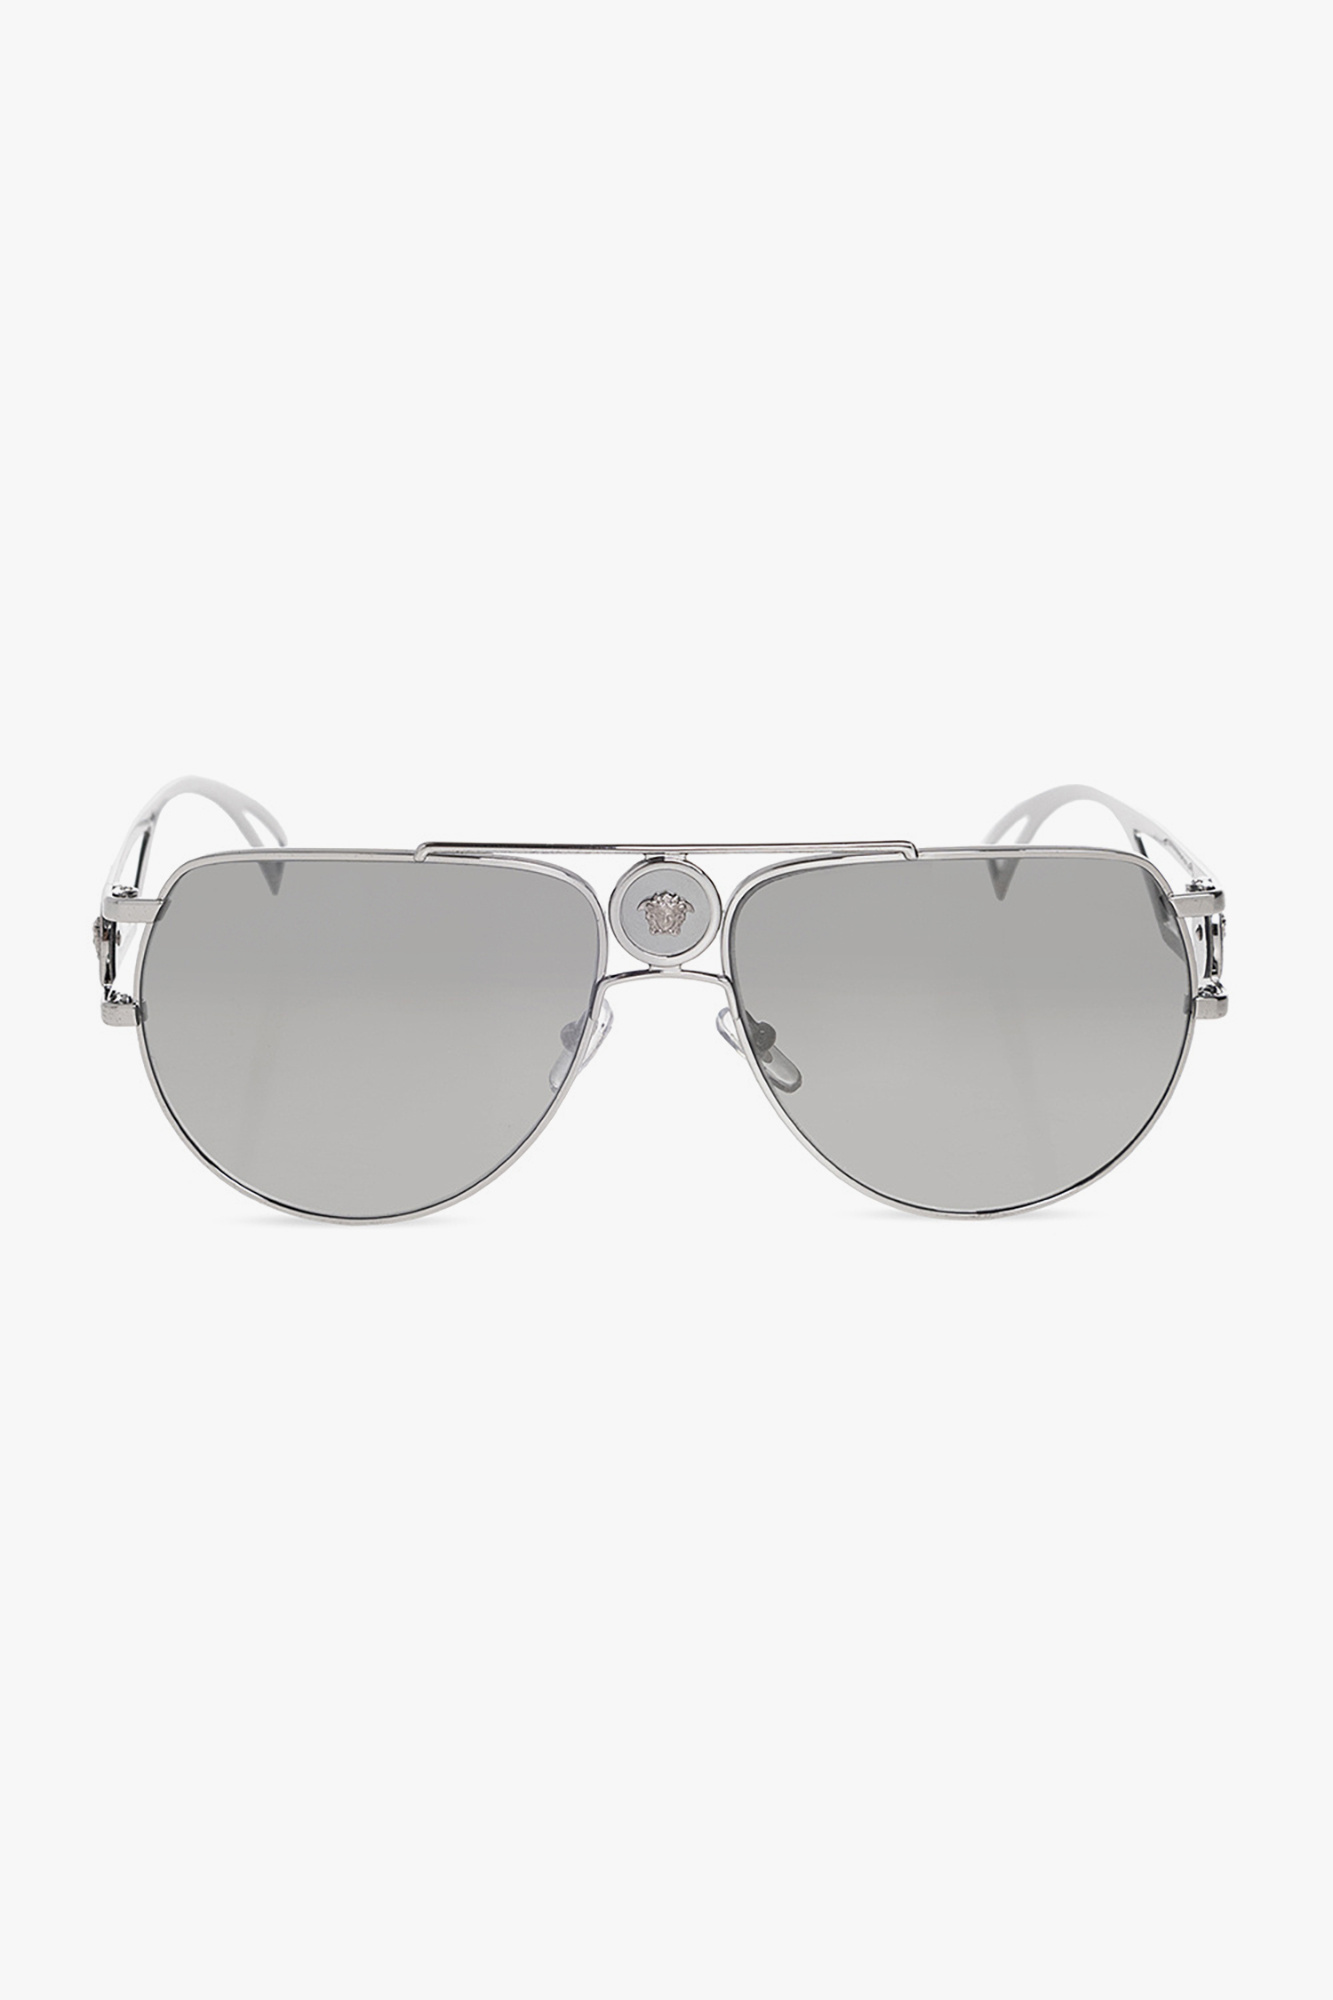 Versace sunglasses REEF from luxury Italian fashion house